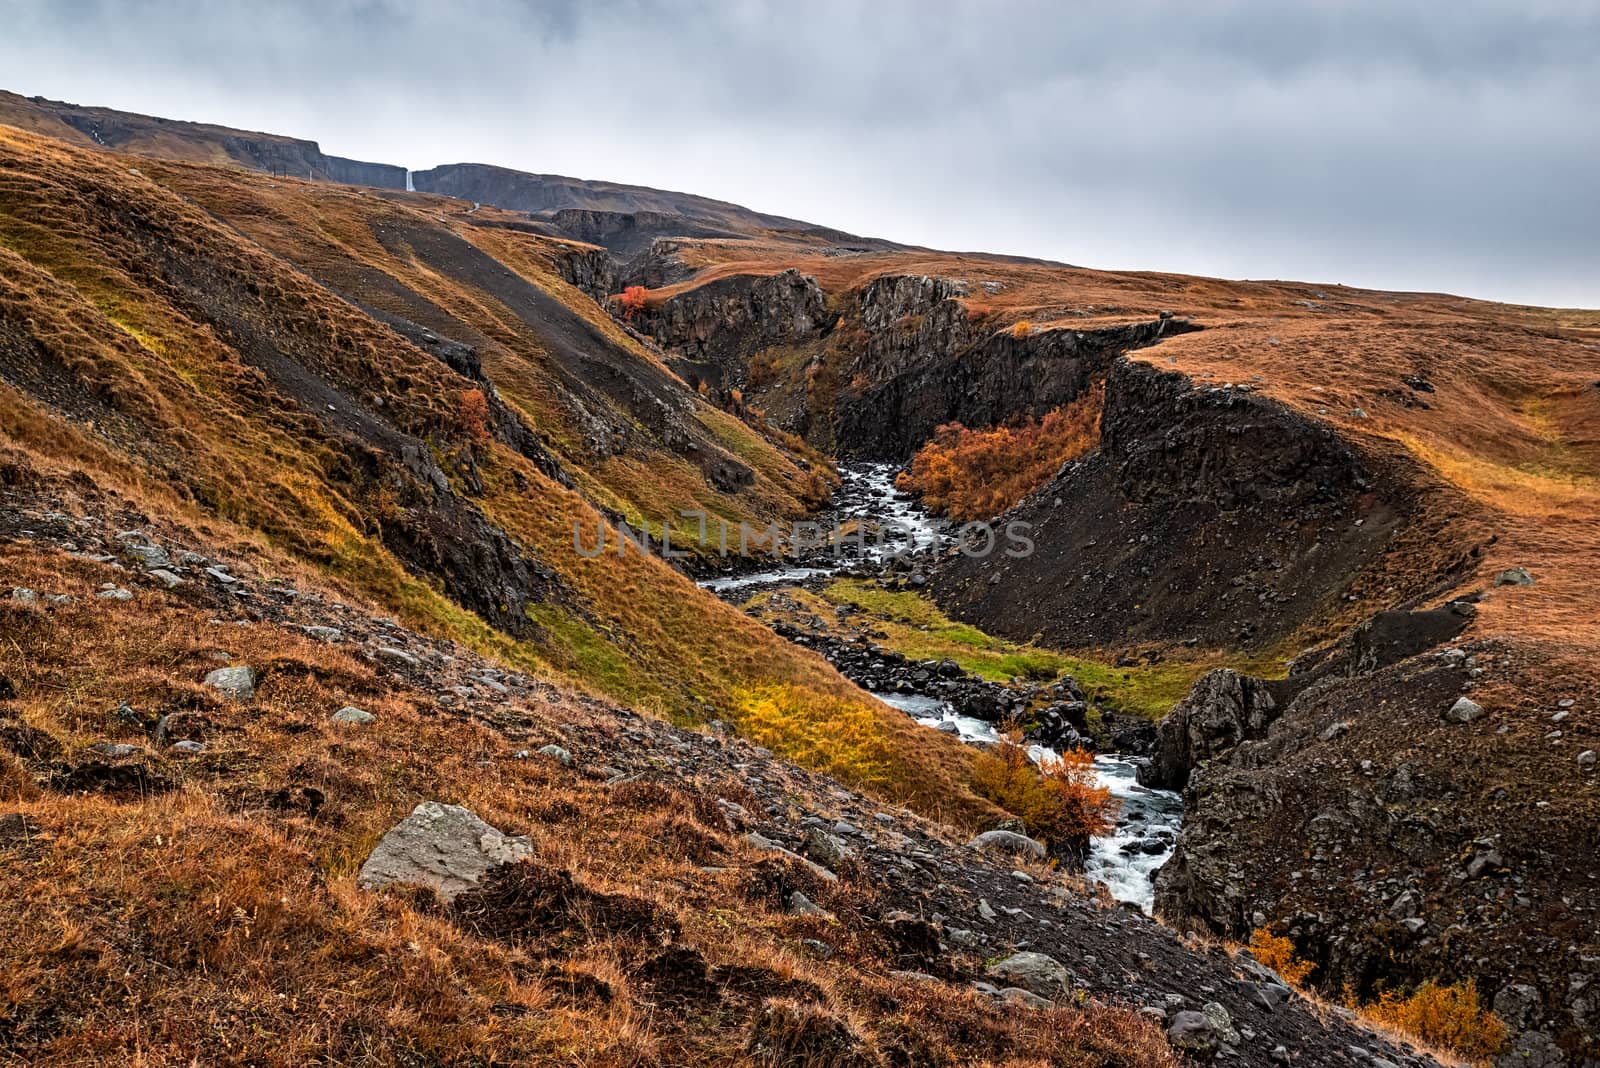 Hengifoss waterfall, Iceland by LuigiMorbidelli